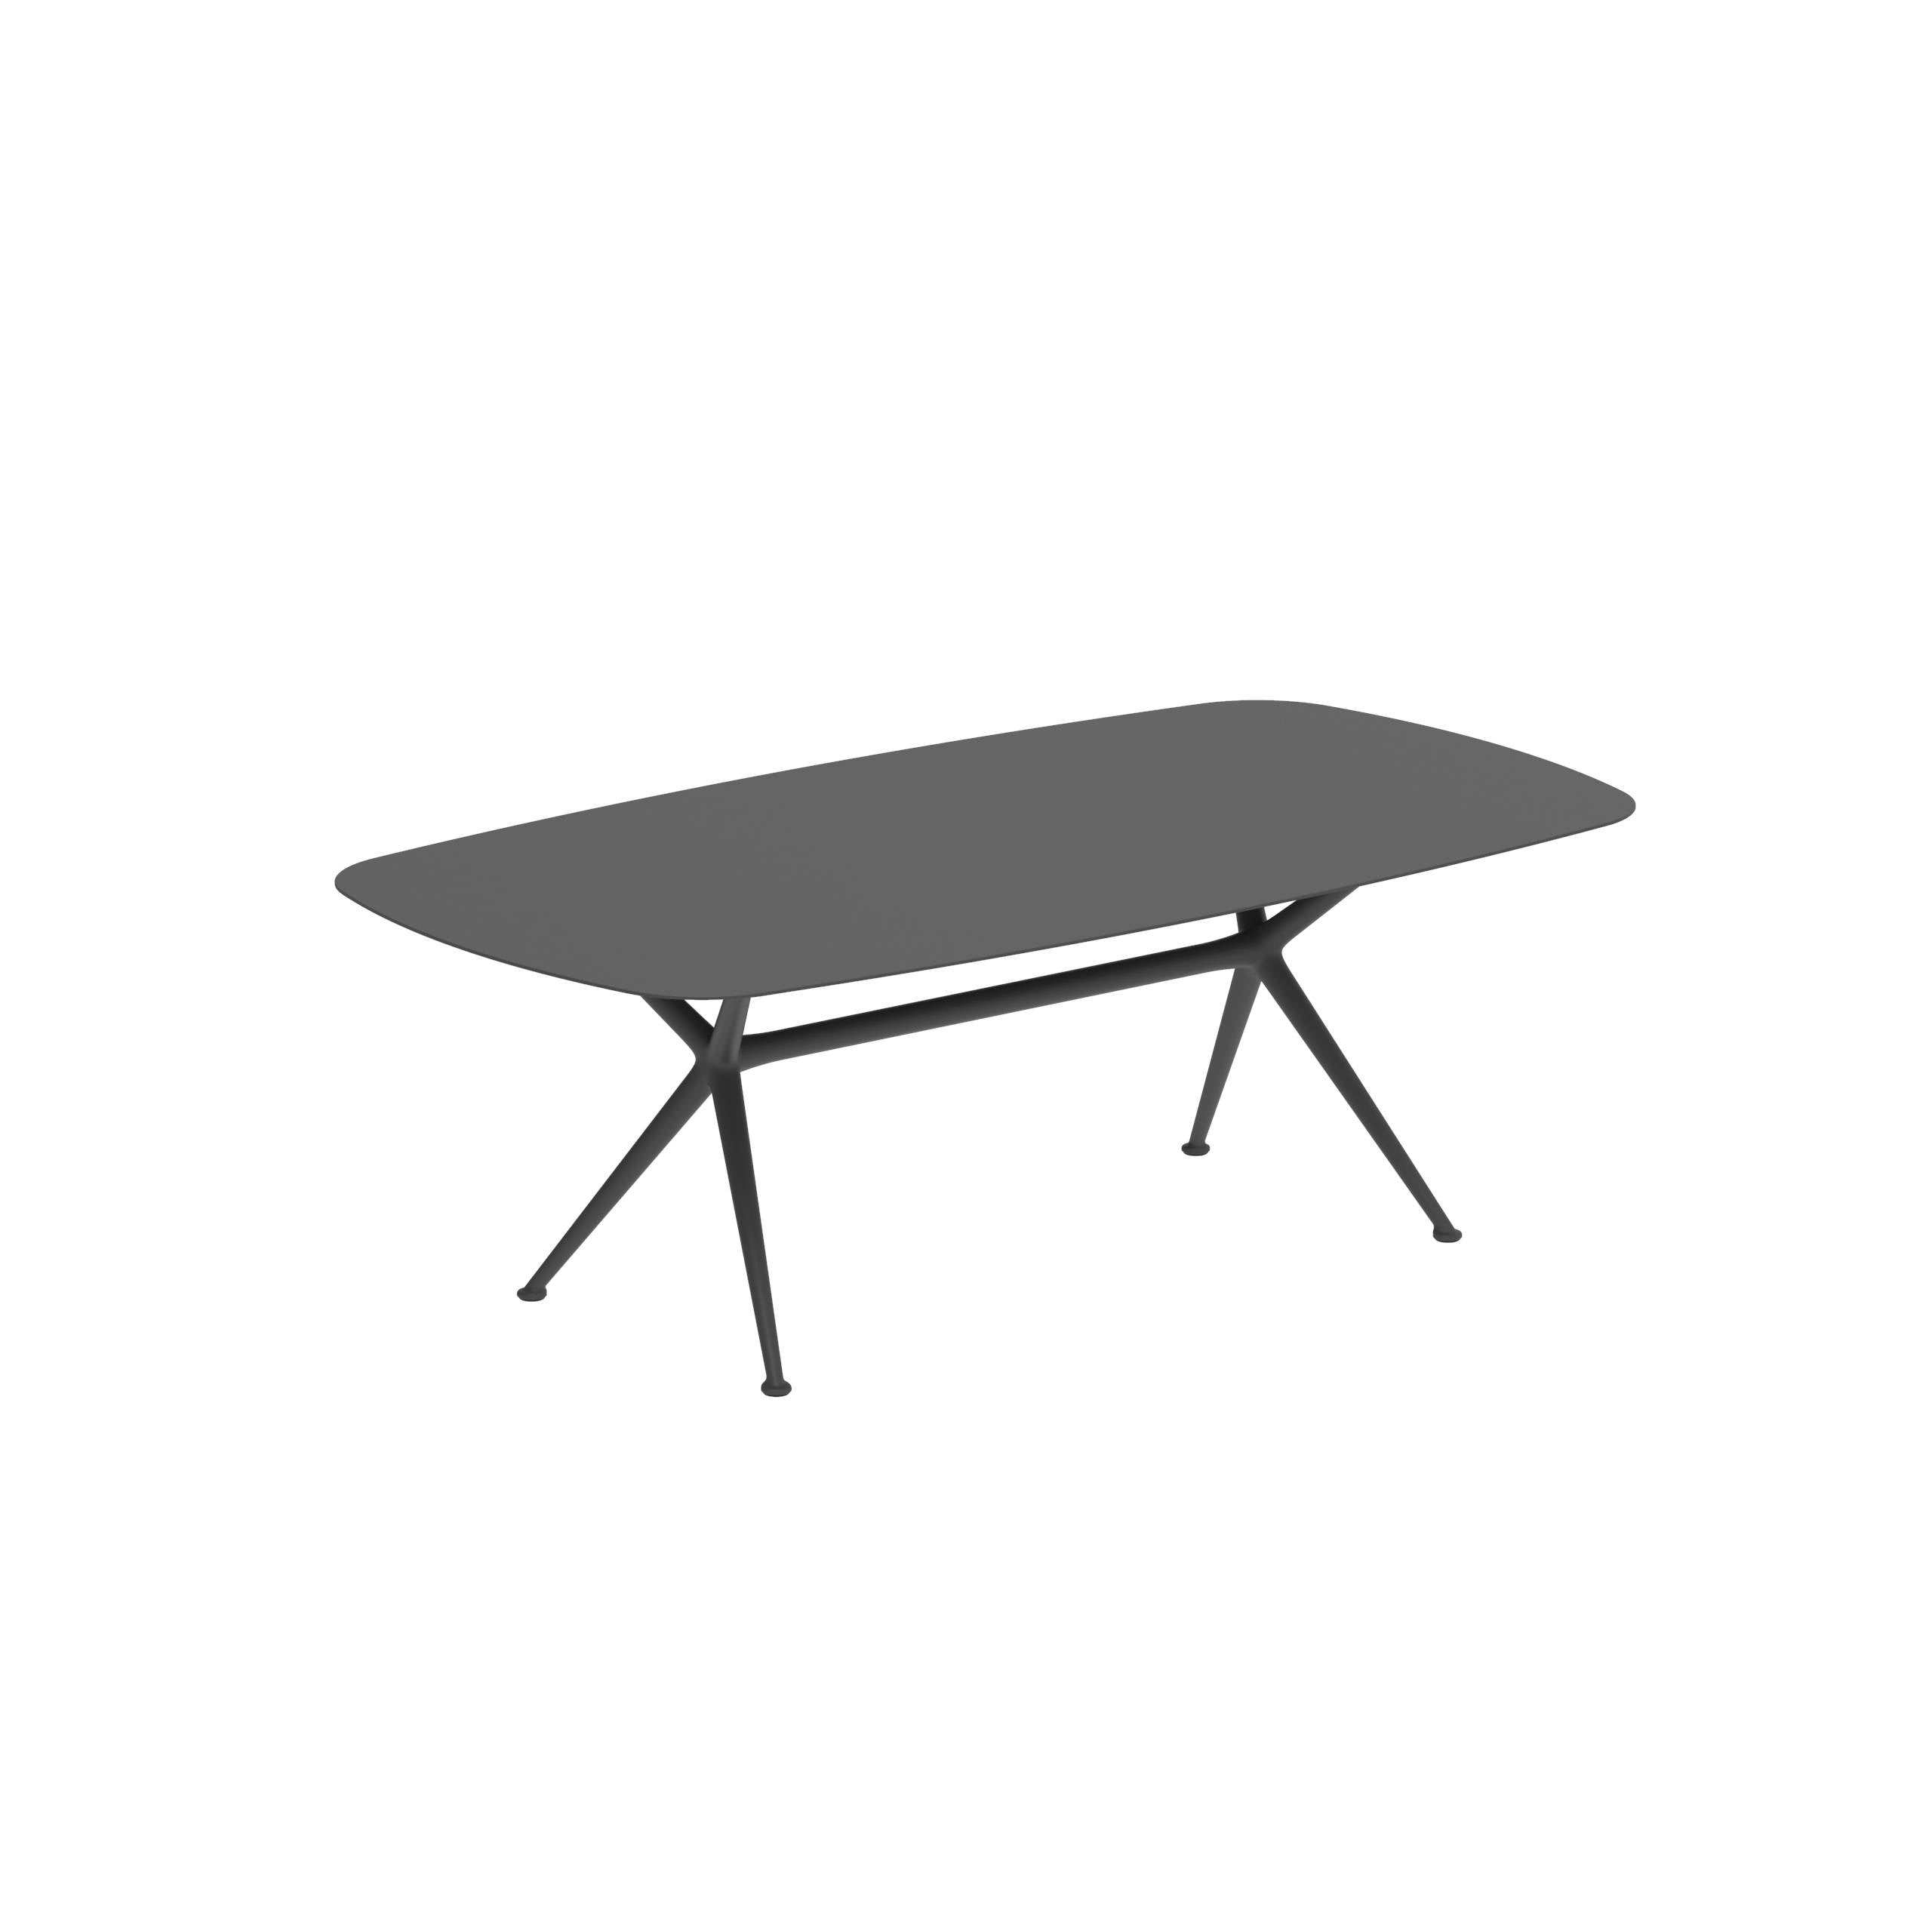 Exes Table 220x120cm Alu Legs Anthracite - Table Top Ceramic Black